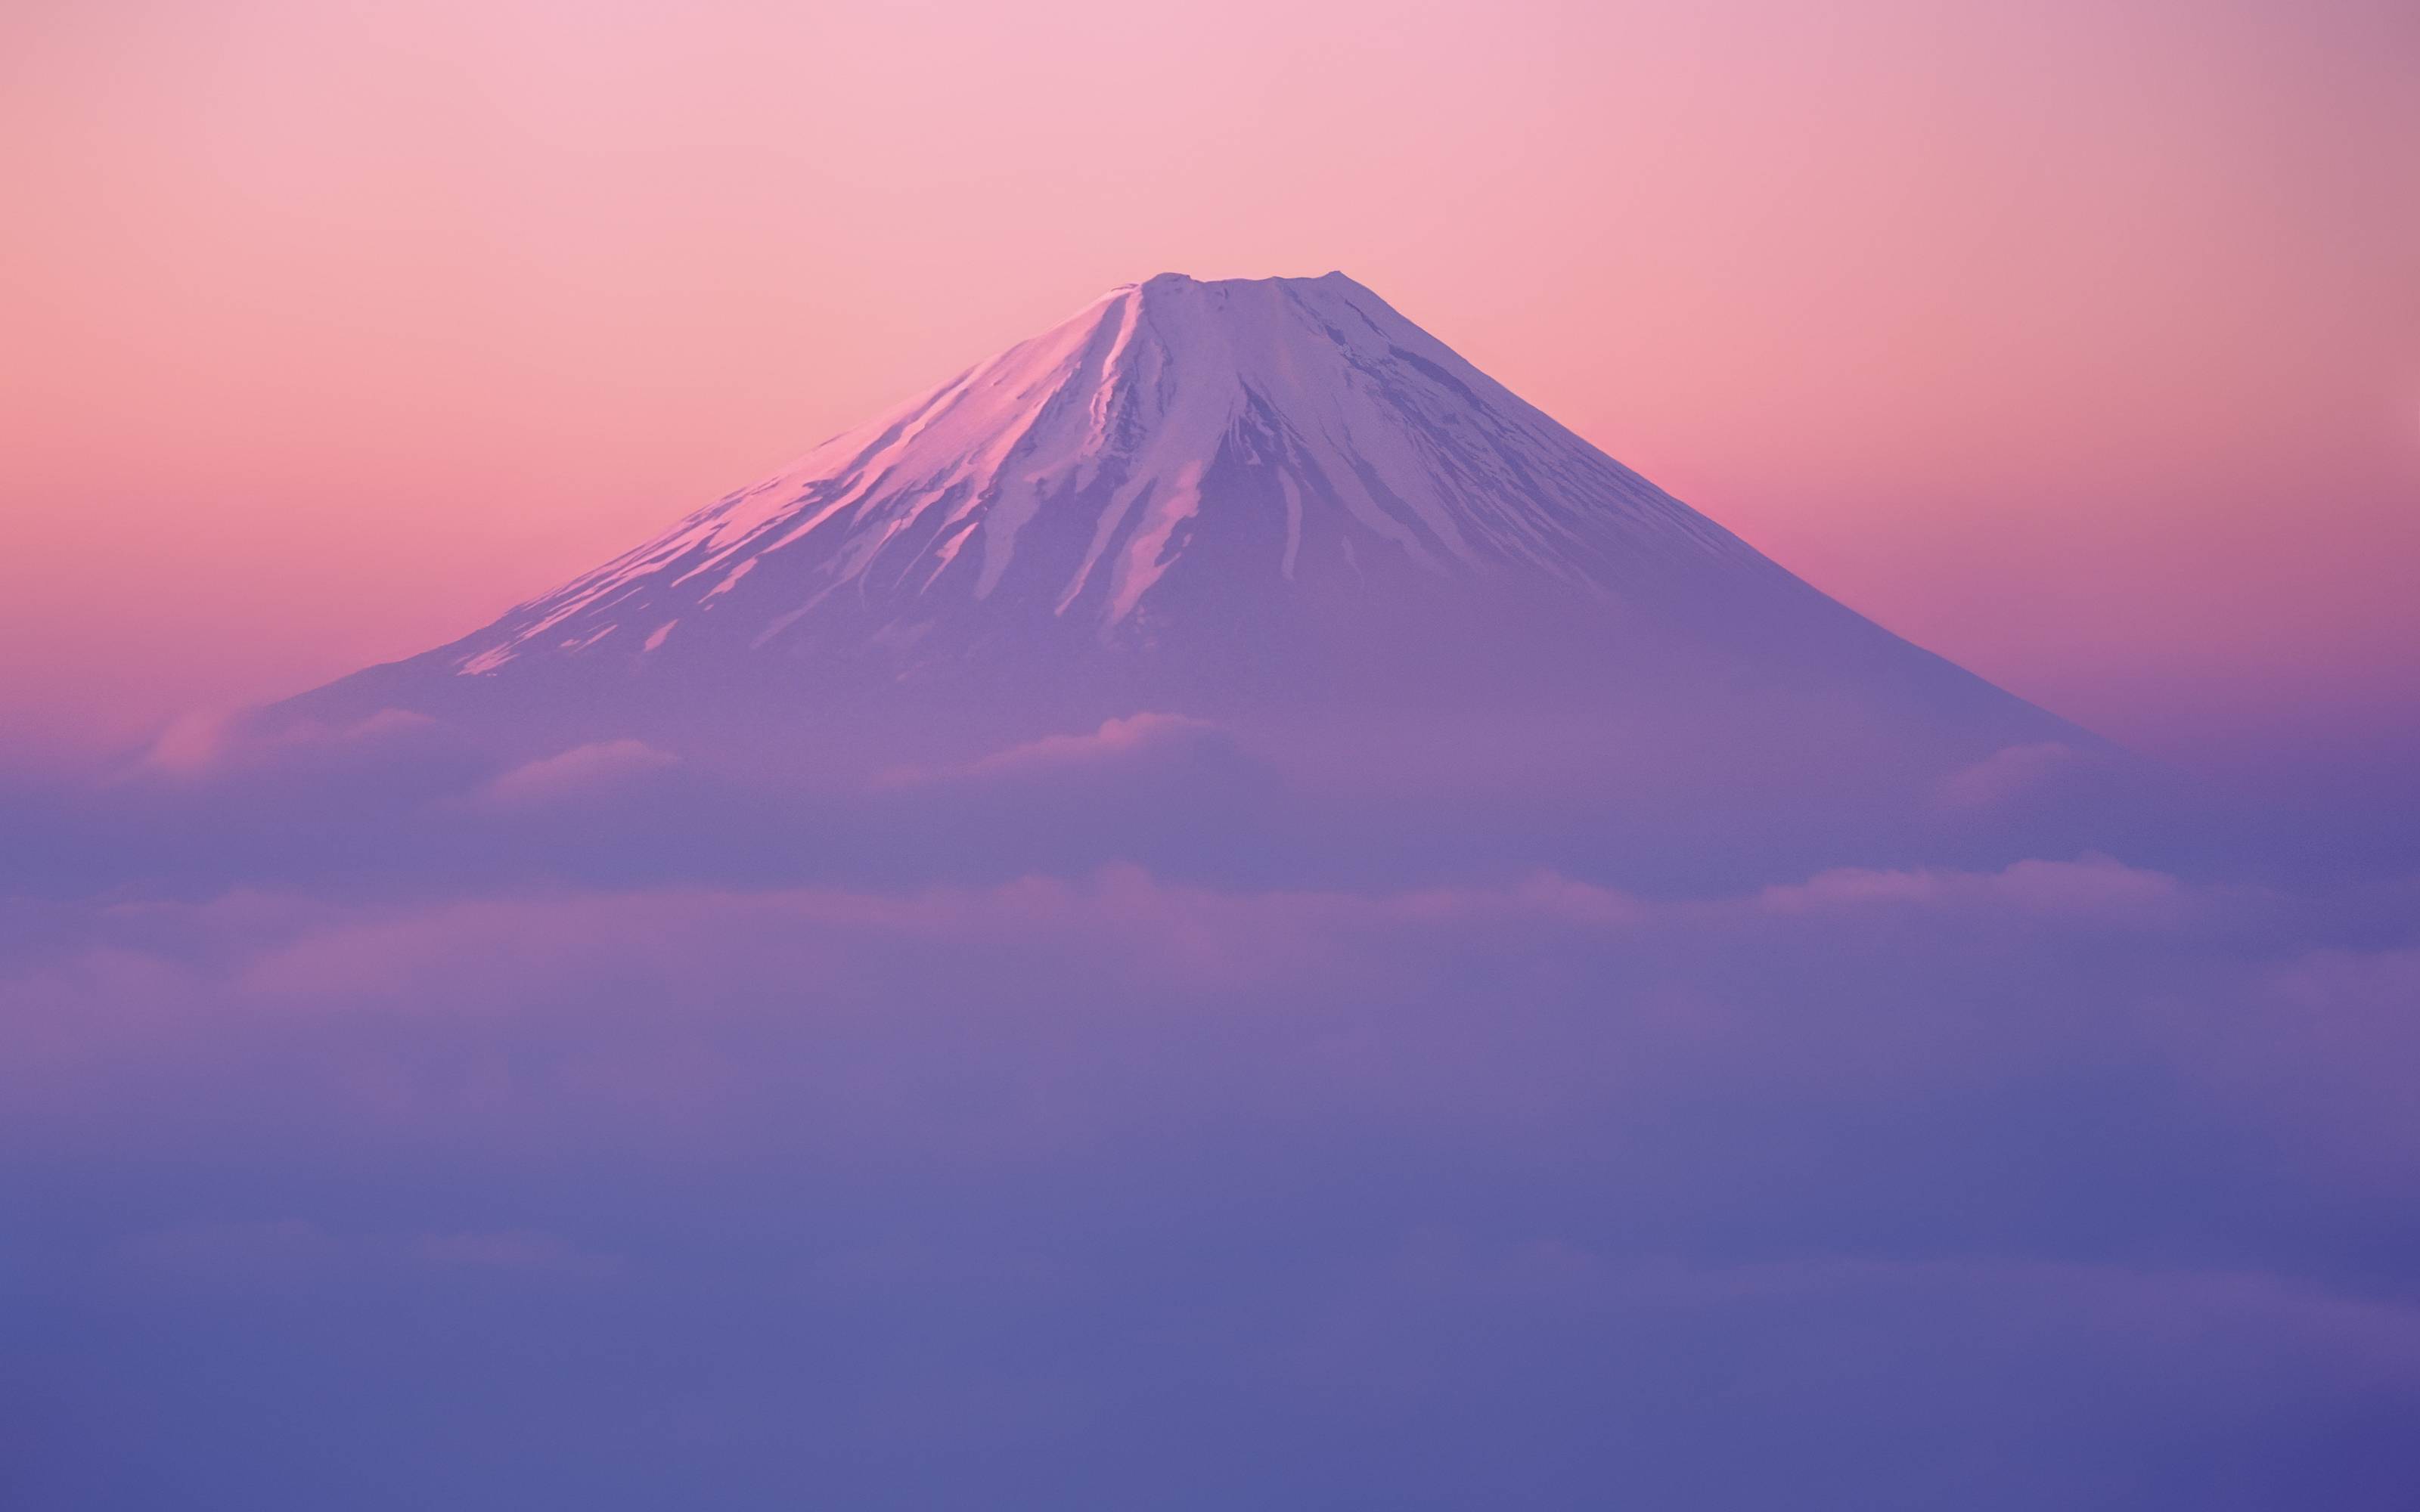 New Fuji Mountain Wallpaper In Mac Os X Lion Hints At Future Retina